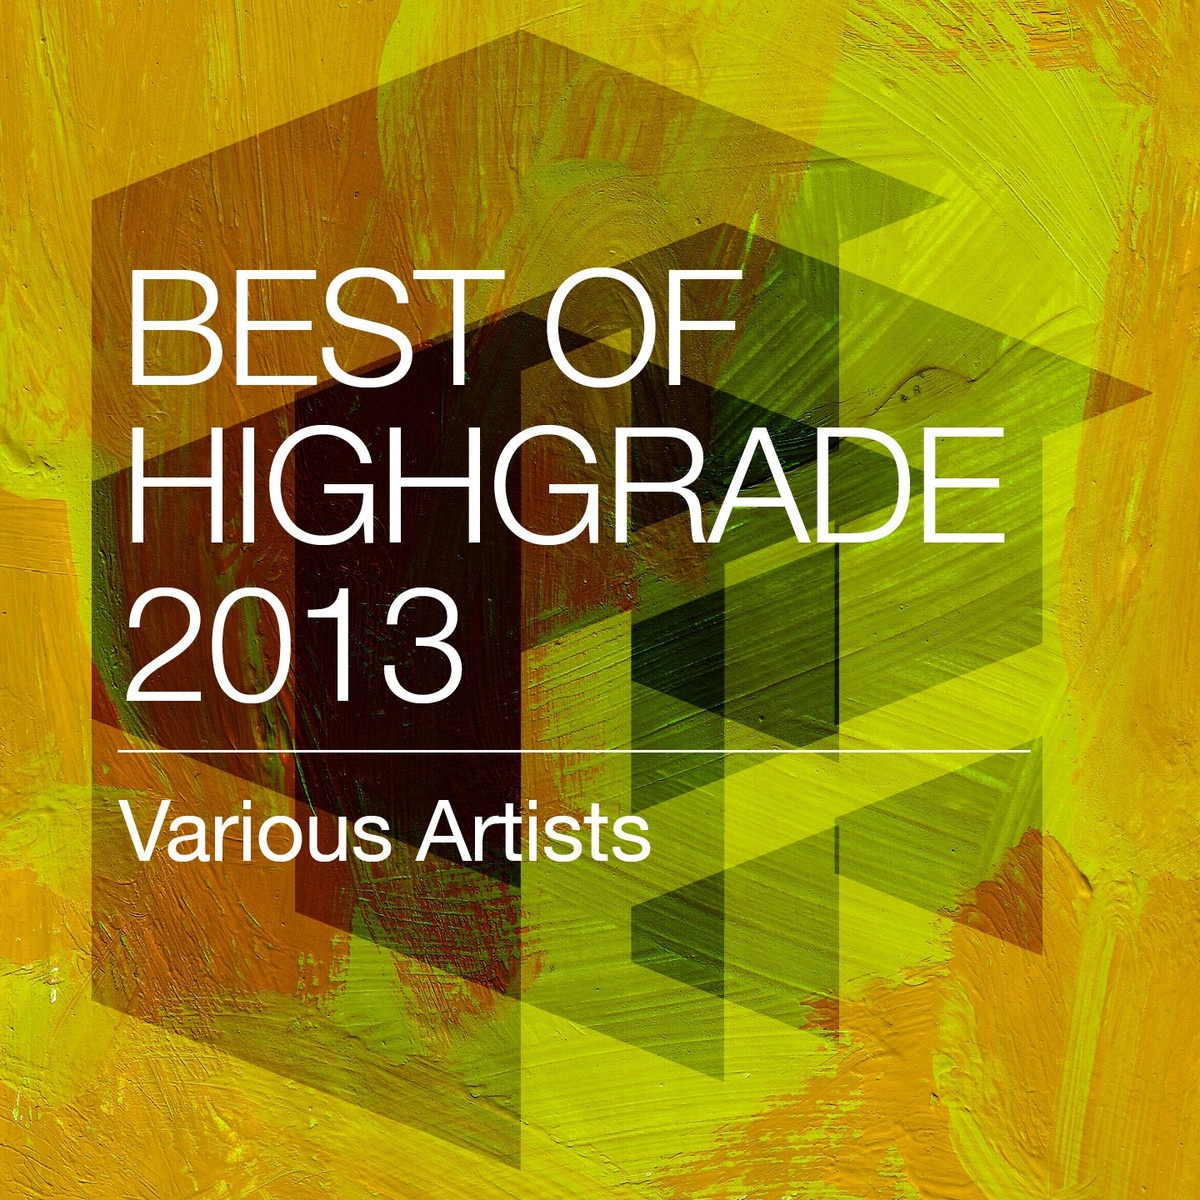 Best of Highgrade 2013